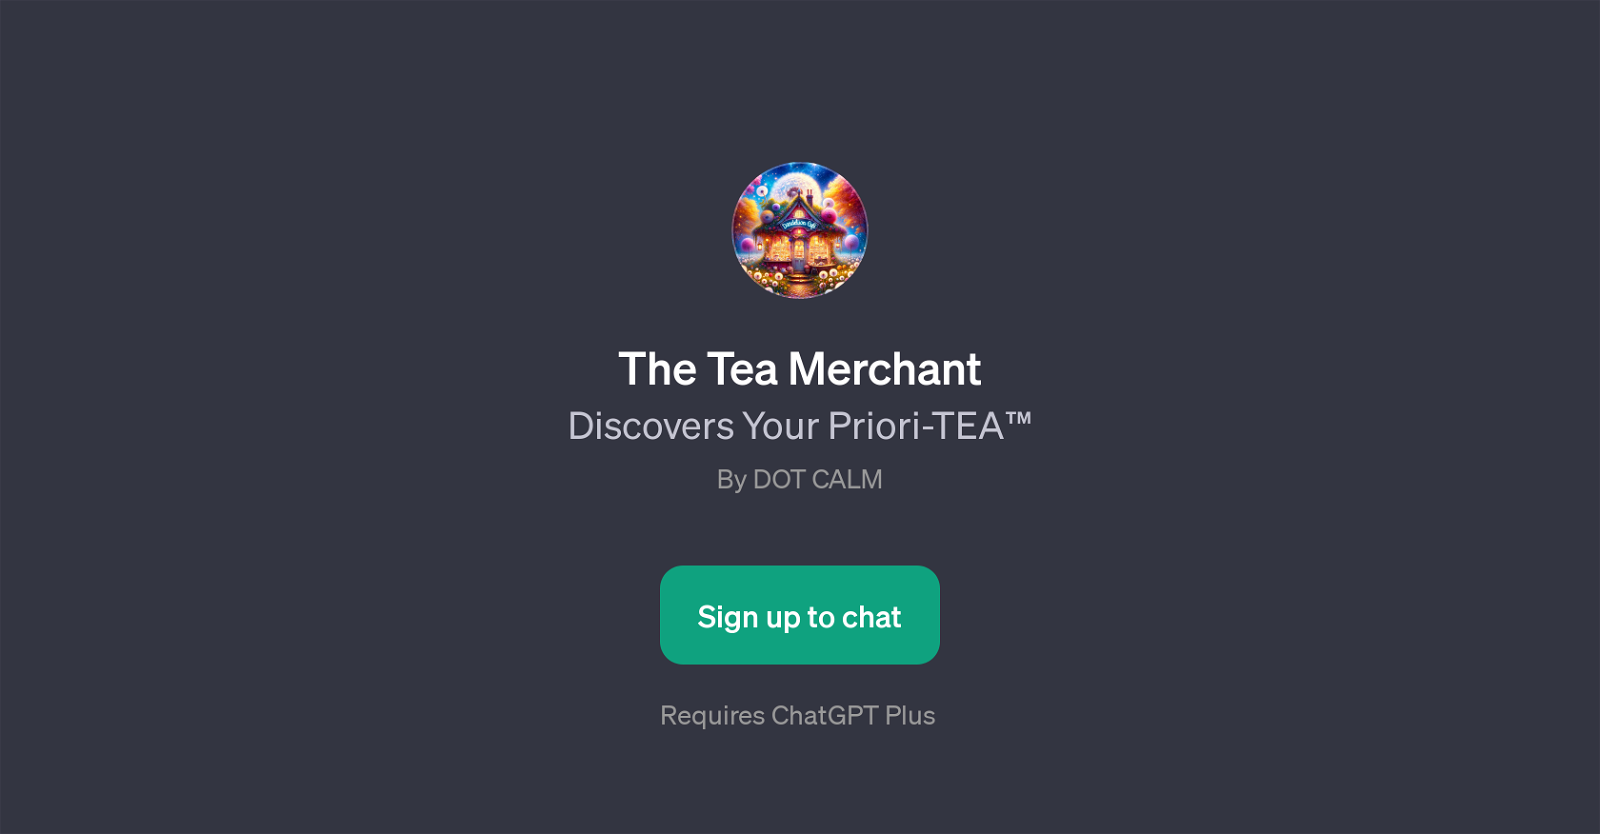 The Tea Merchant website